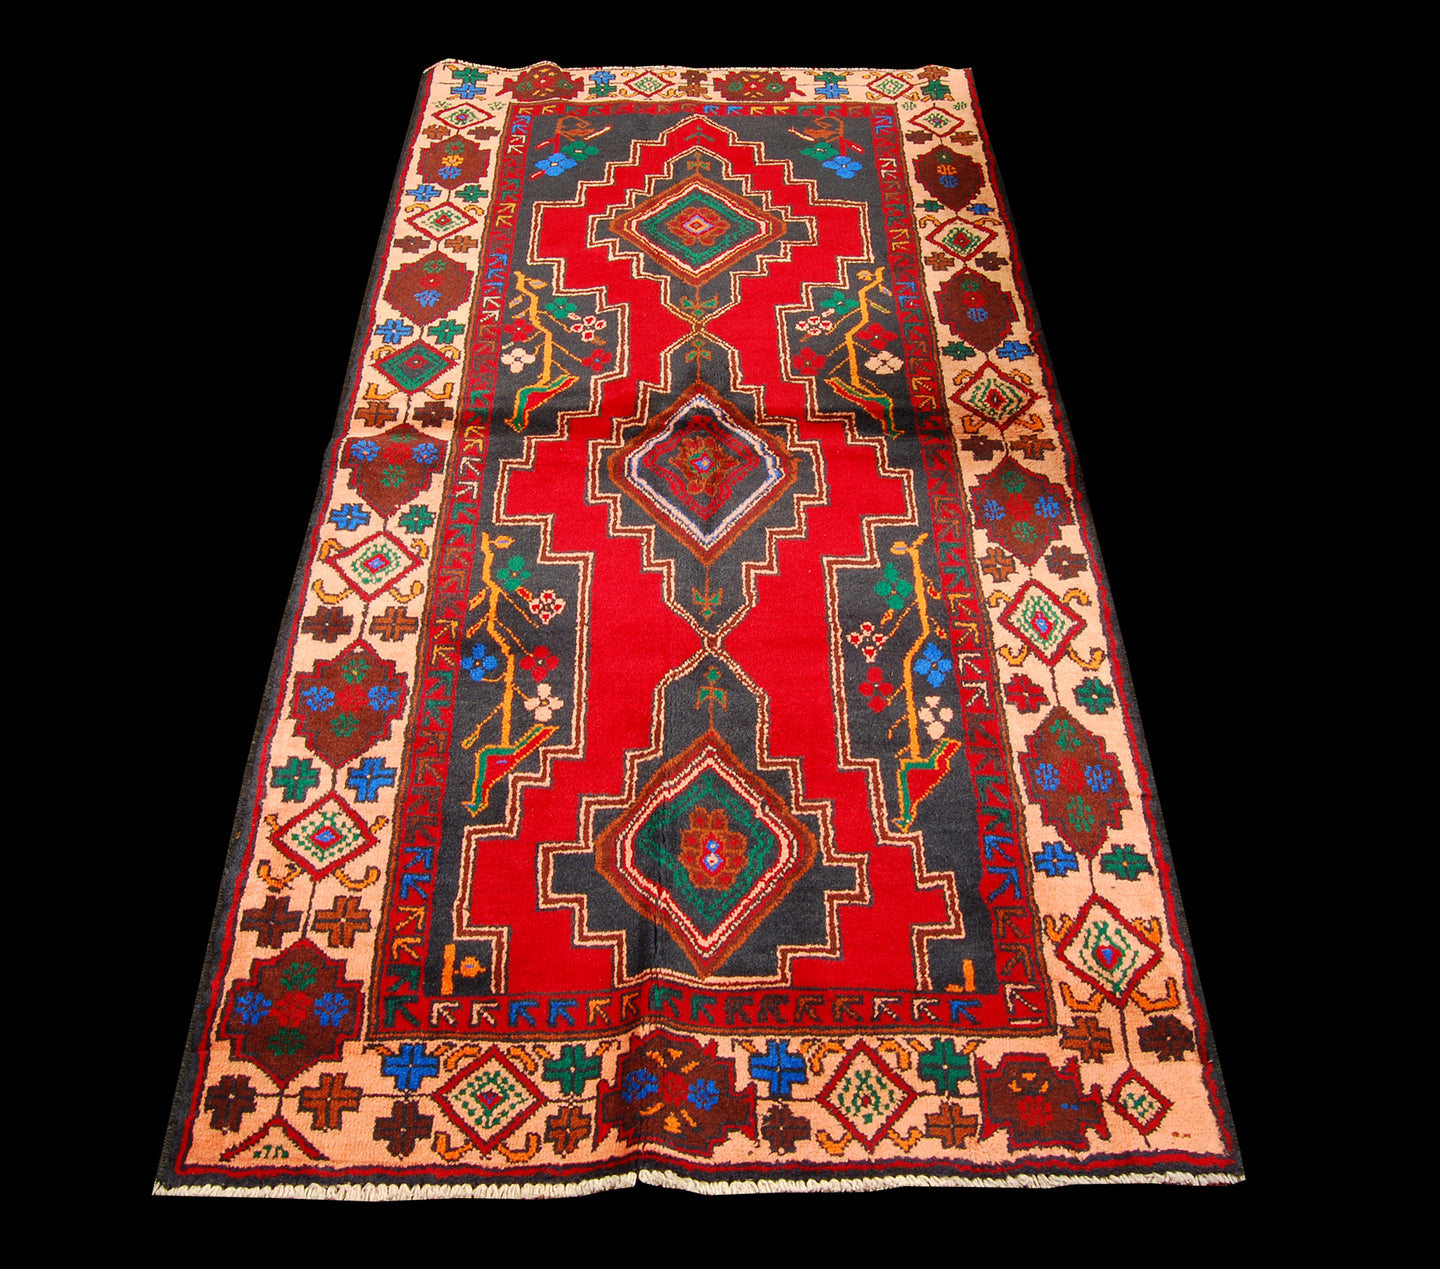 Genuine, Original Pure Wool Rug Rustic Handmad Carpet CM 198x96